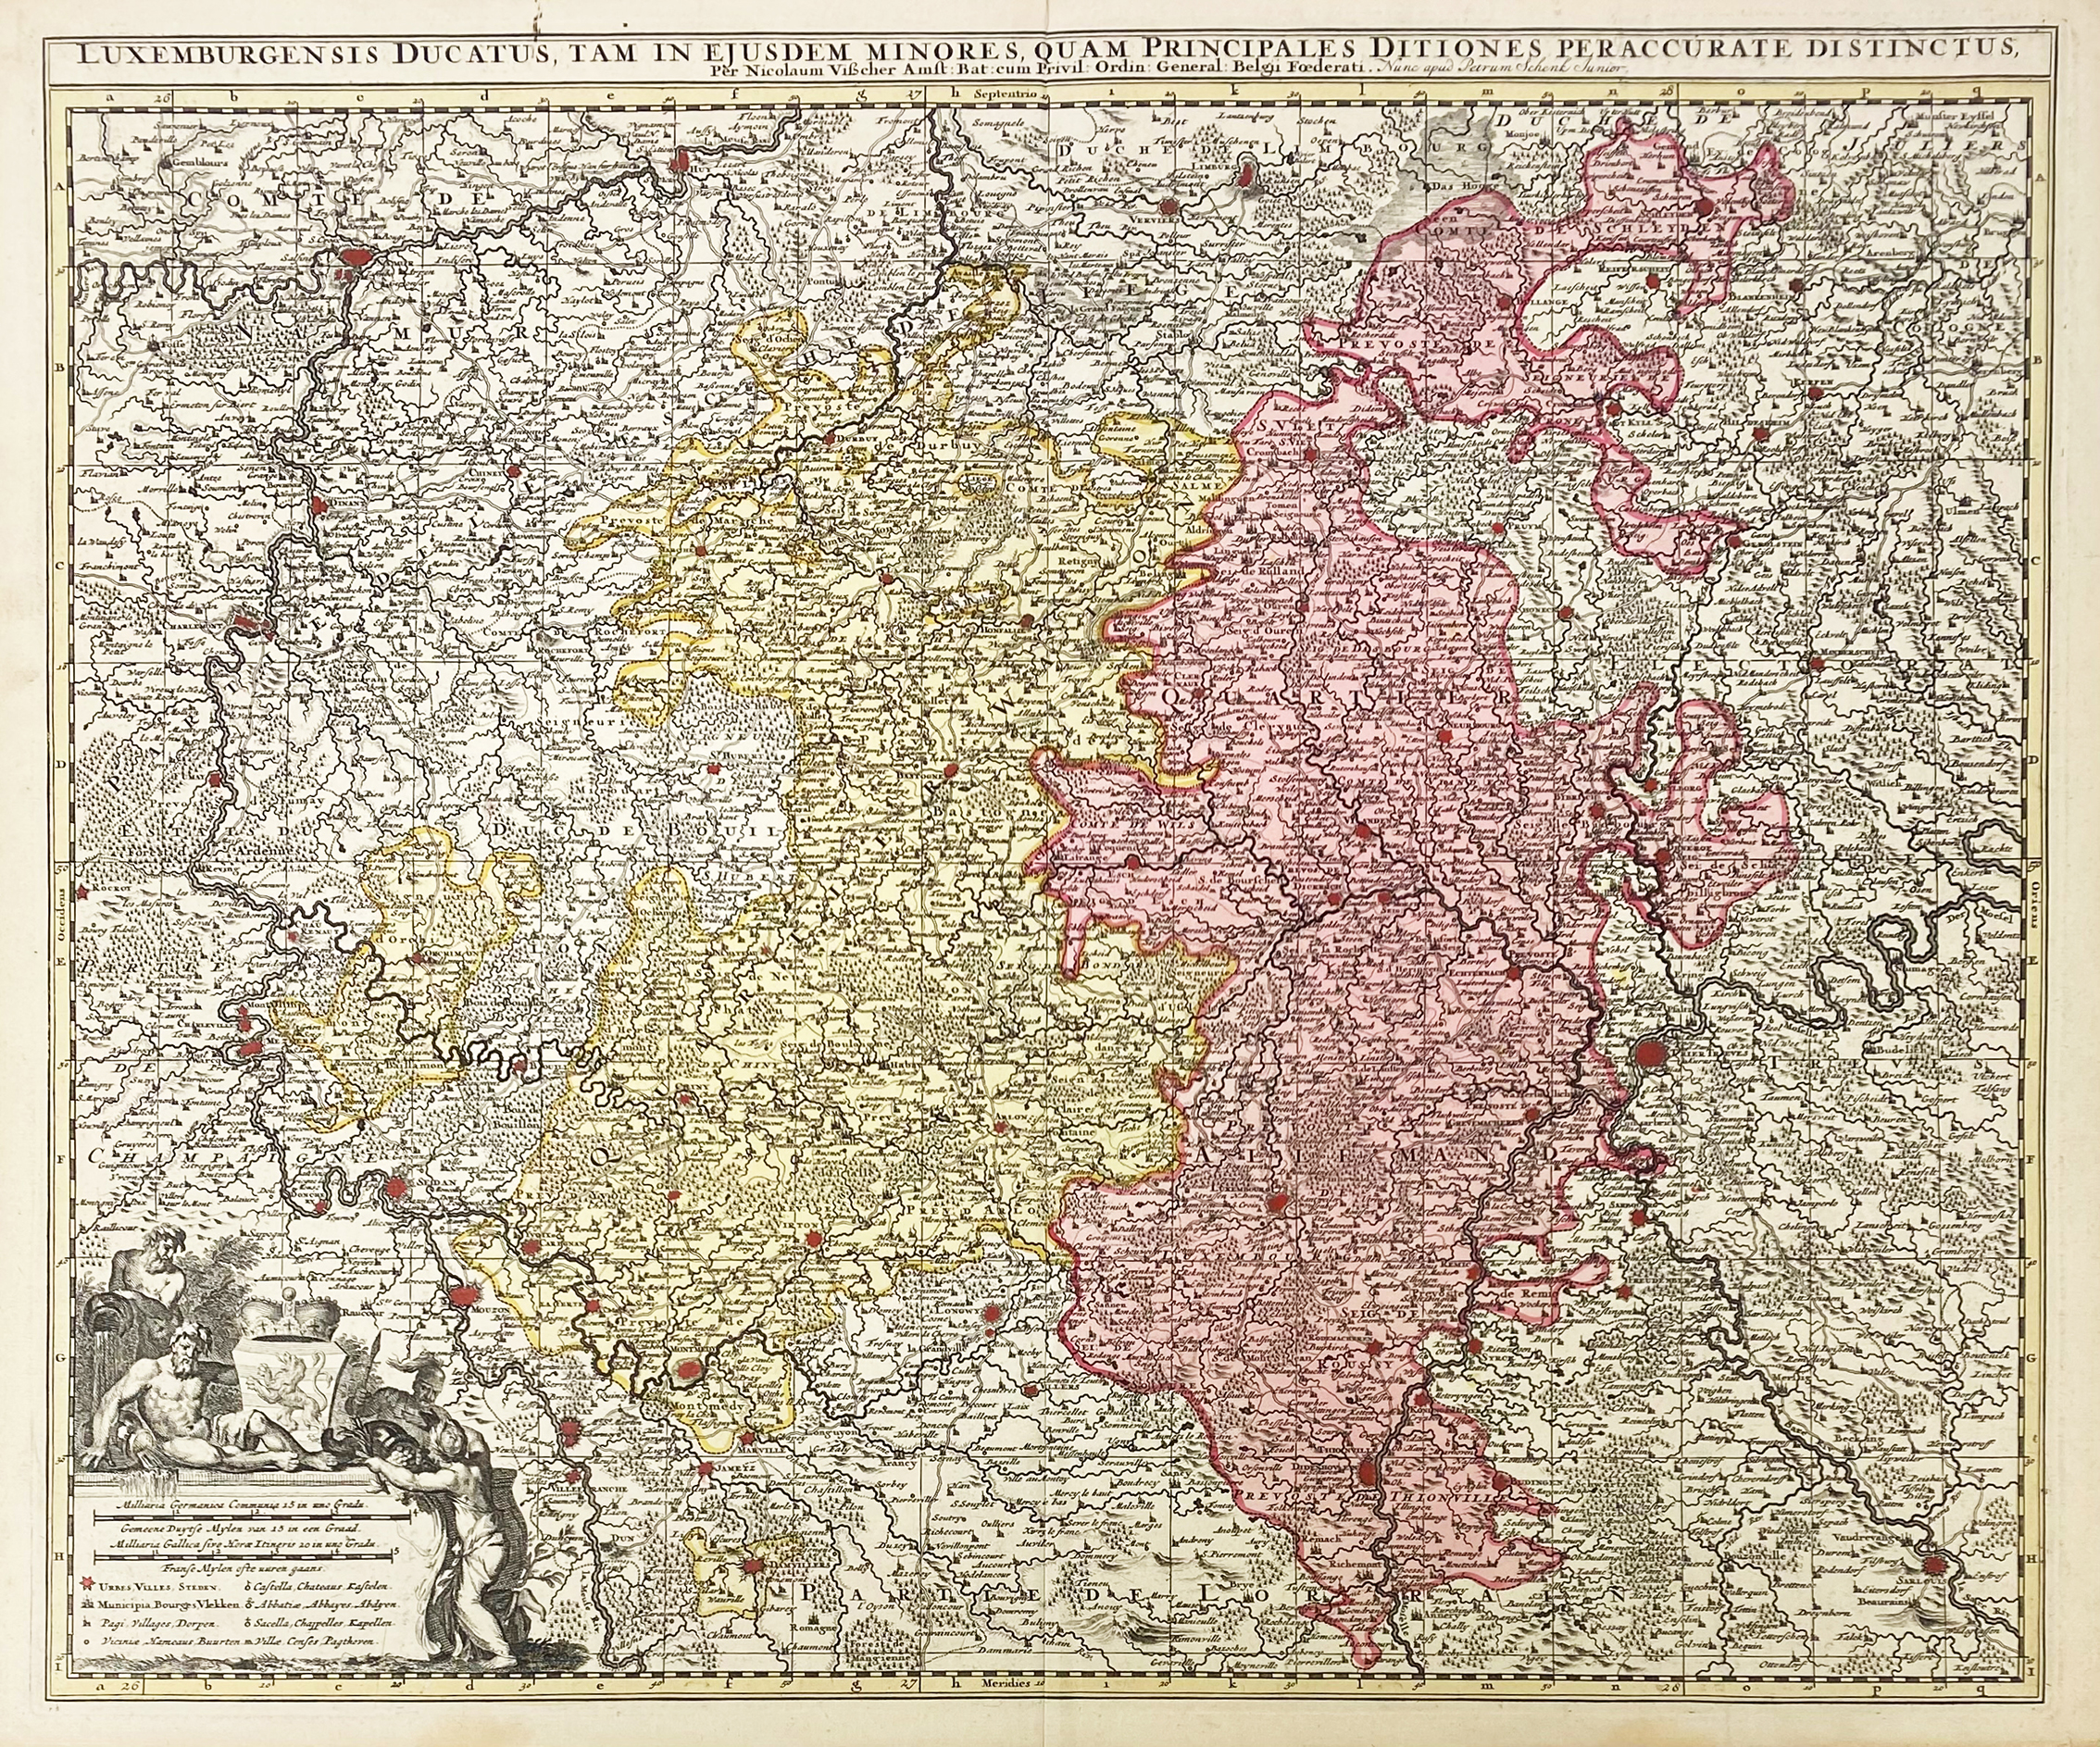 LUXEMBURG/BELGIUM -- "LUXEMBURGENSIS DUCATUS, (…)". (Amst.), P. Schenk jr., n.d. (c. 1726-35). Engr